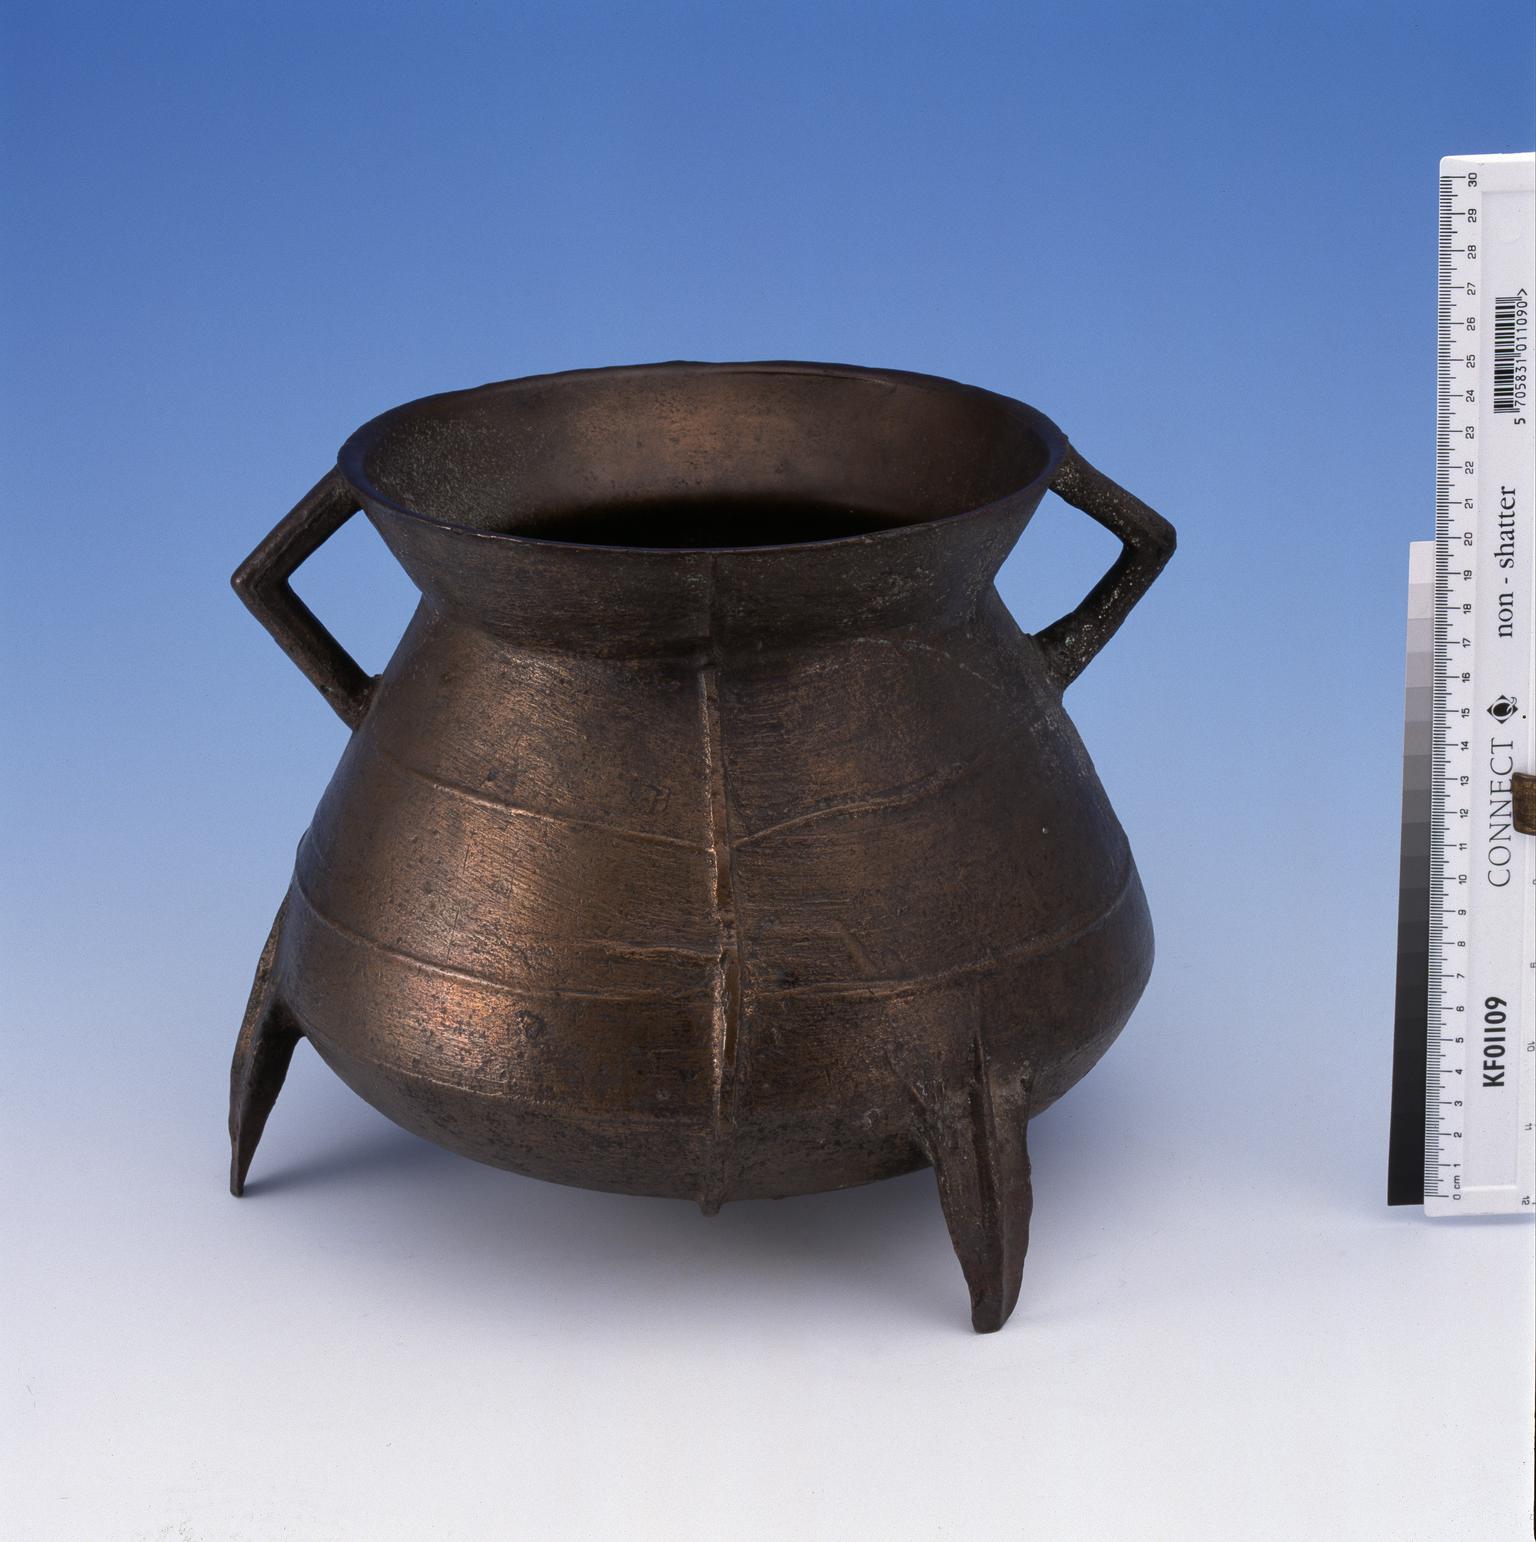 Post-Medieval copper alloy cauldron